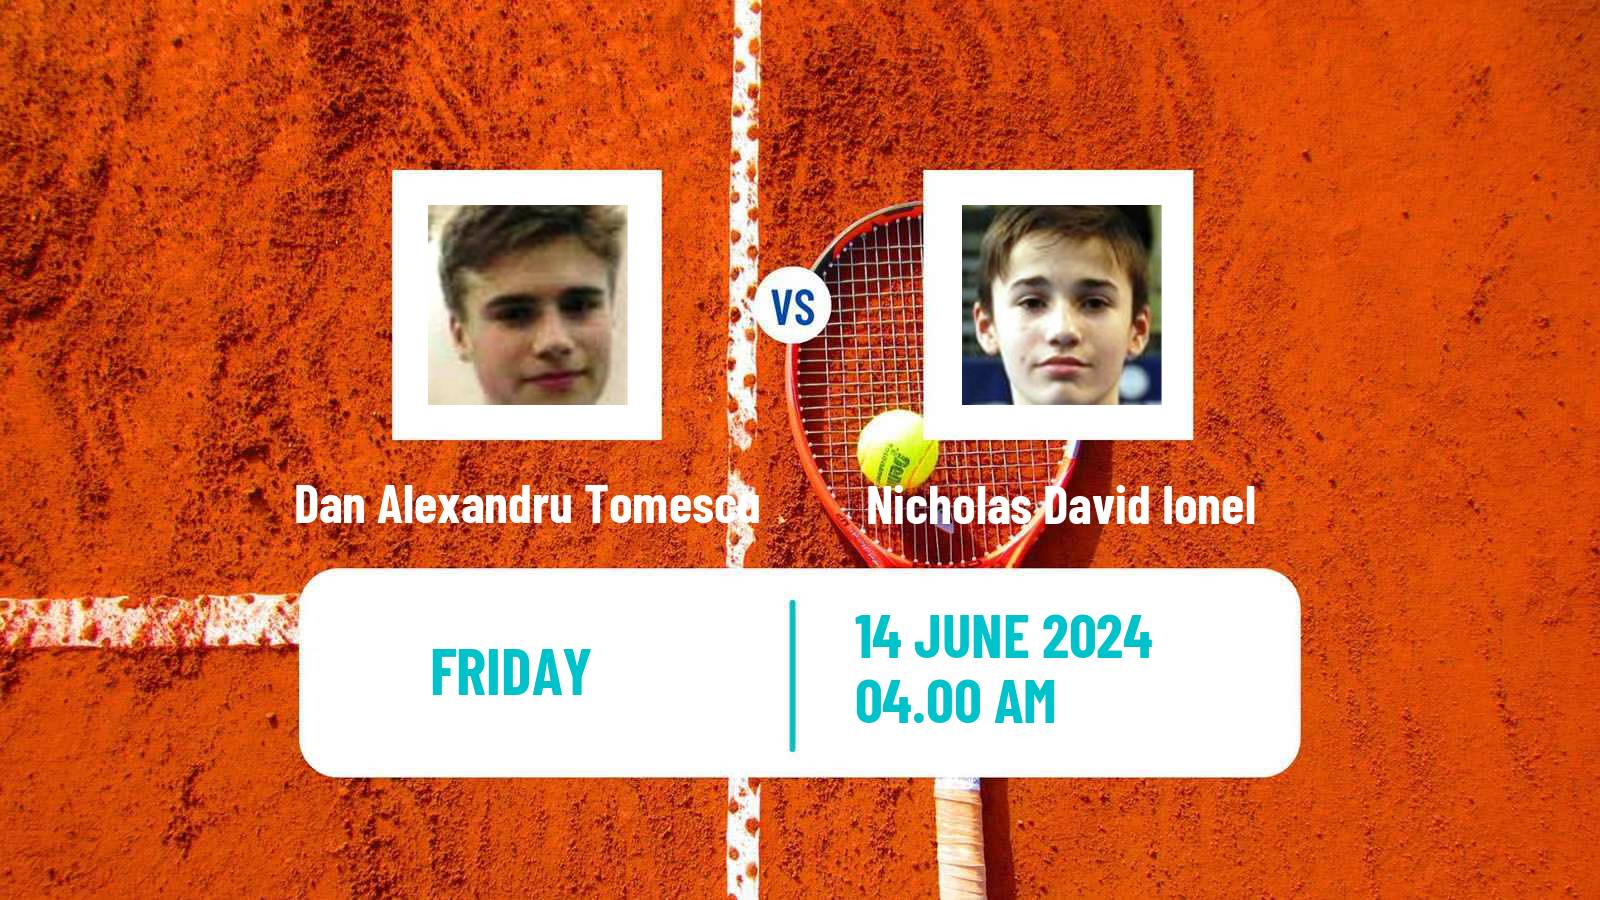 Tennis ITF M15 Oradea Men Dan Alexandru Tomescu - Nicholas David Ionel